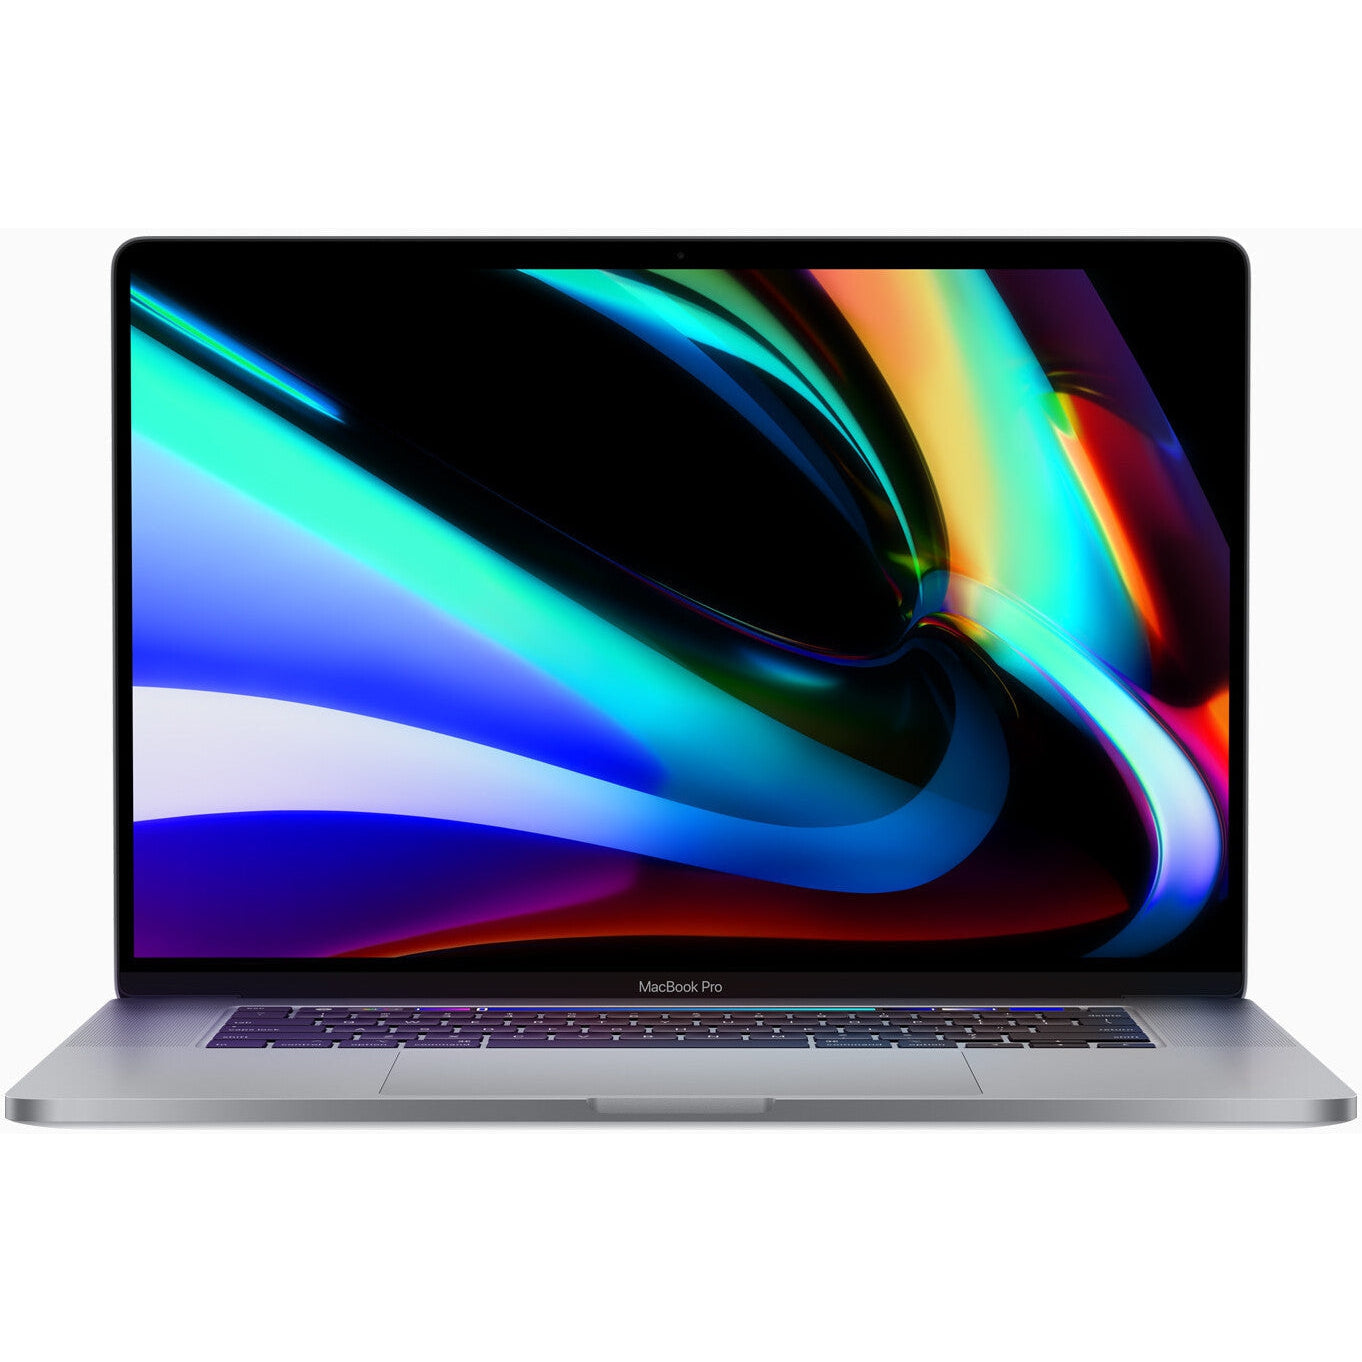 Apple MacBook Pro 16" MVVJ2B/A (2019) Laptop, Intel Core i7, 16GB, 512GB, Space Grey - Open Box